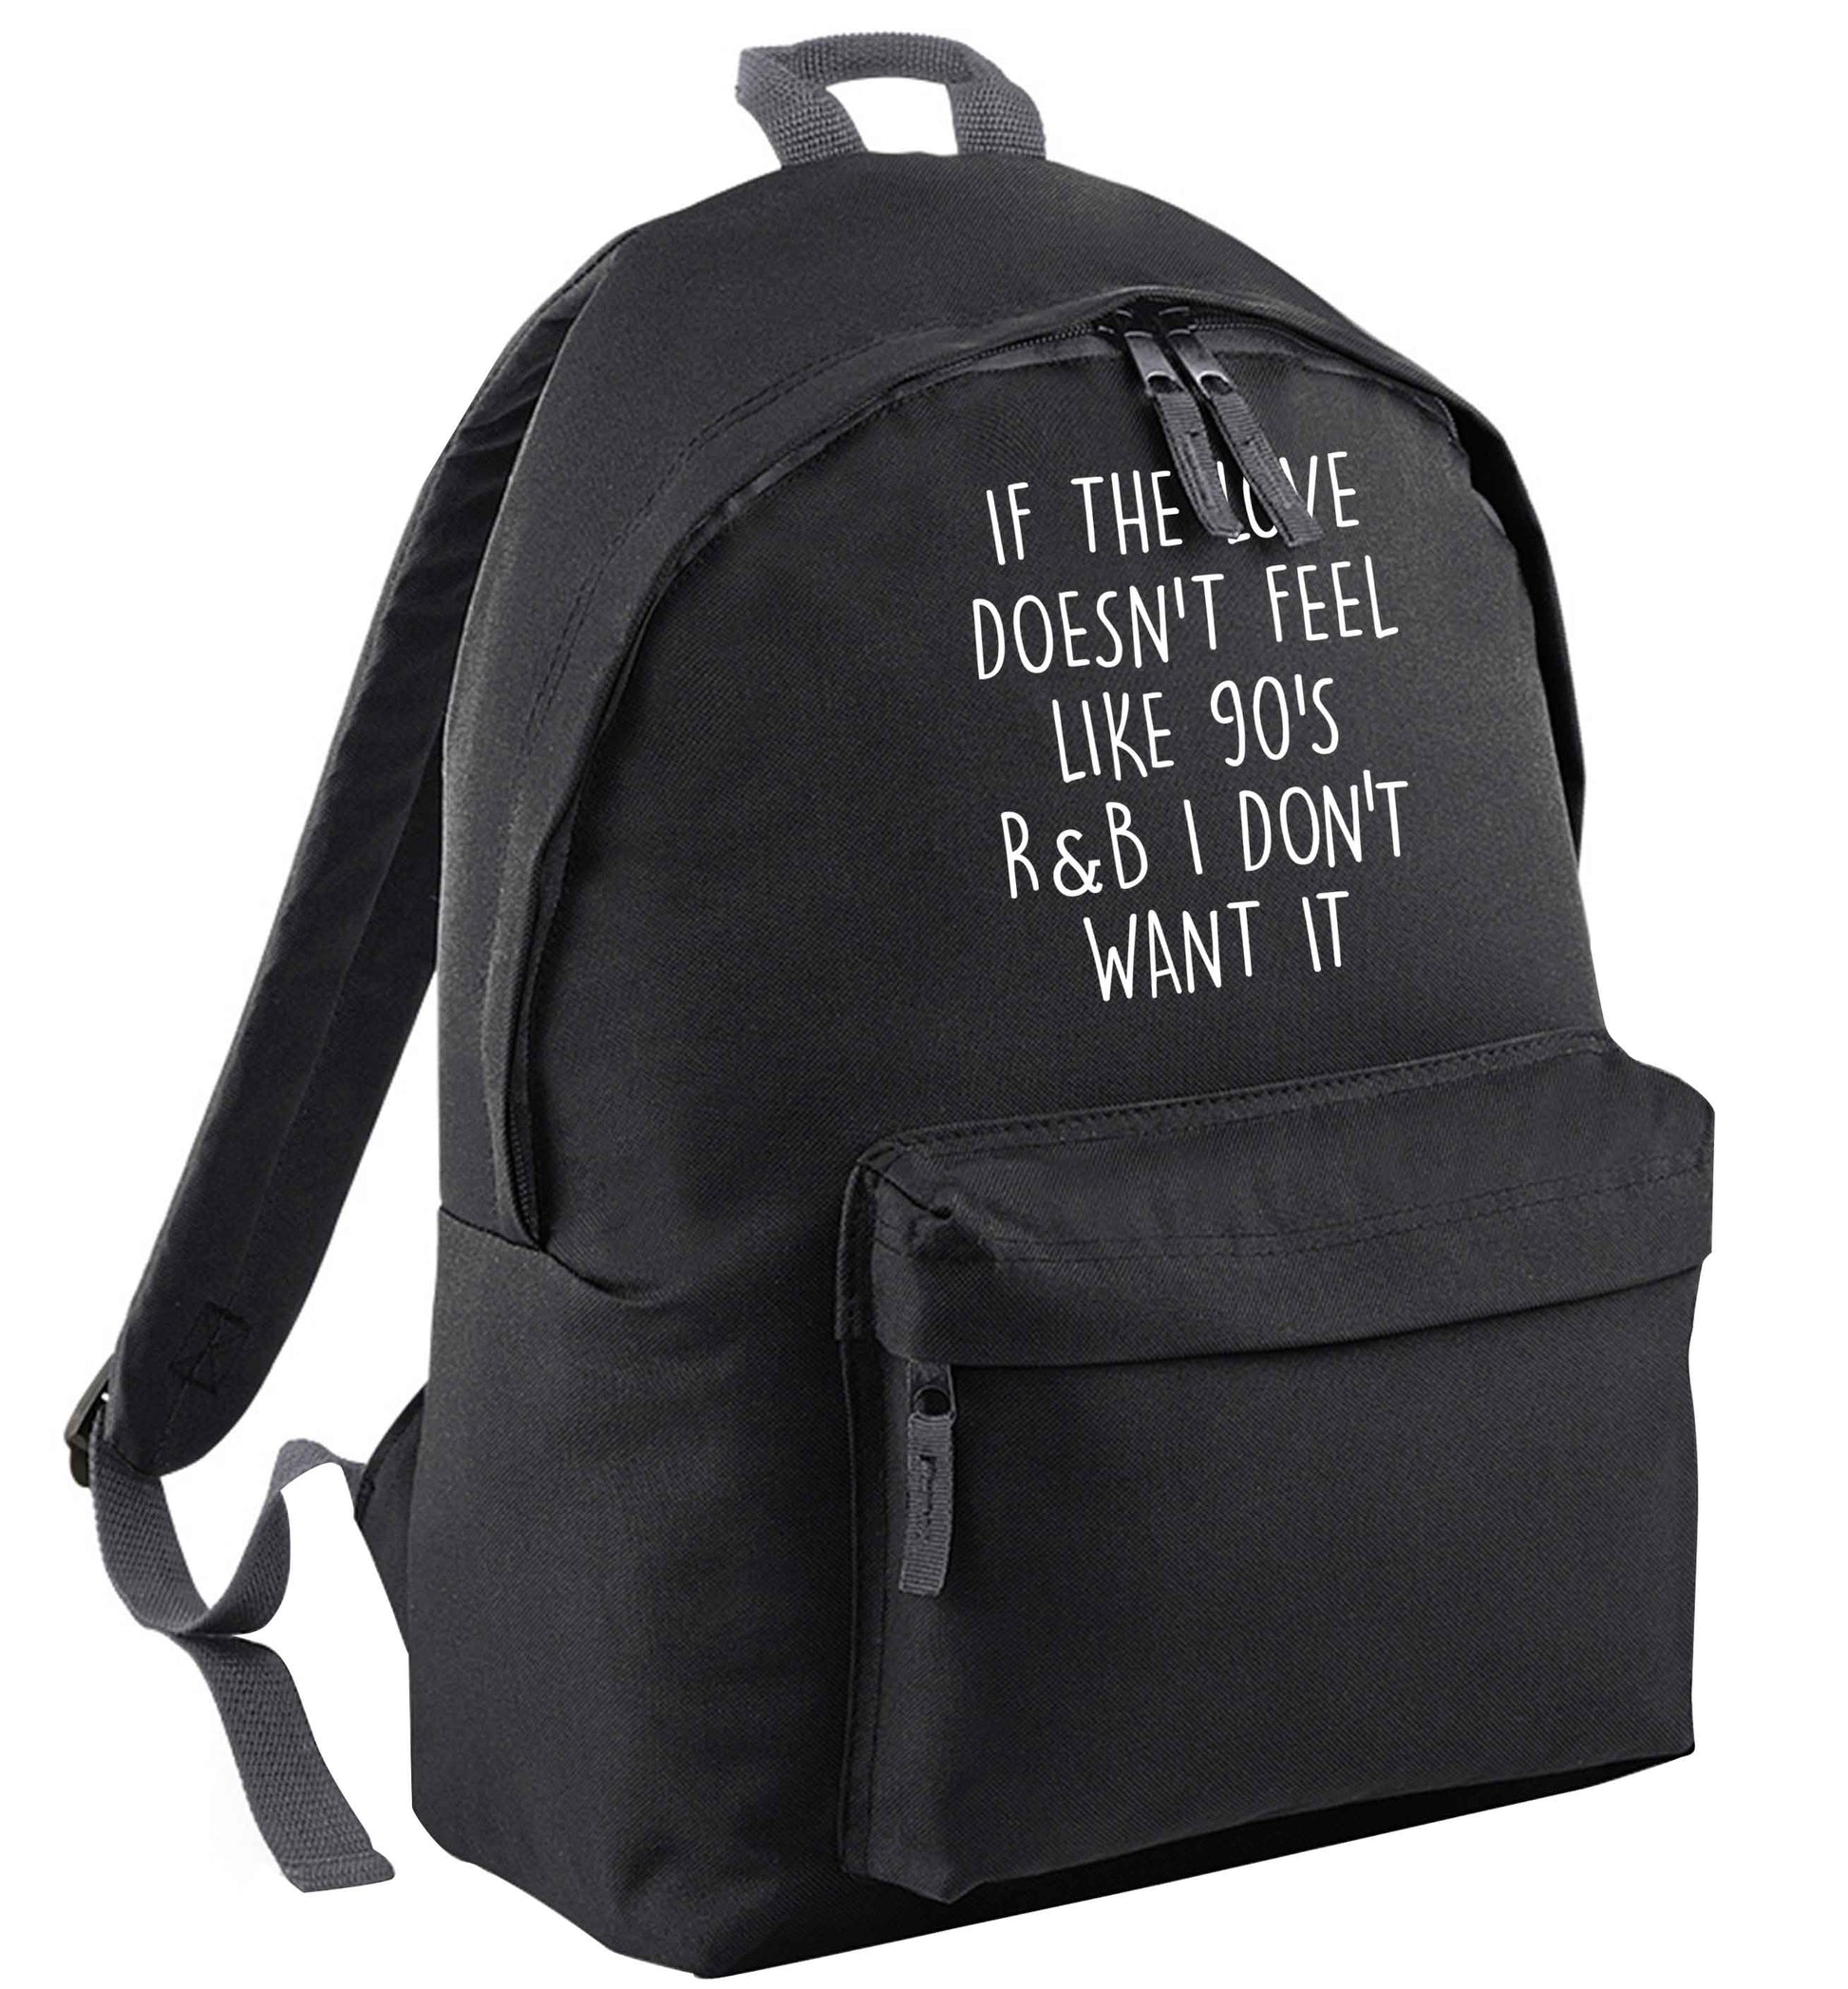 If the love doesn't feel like 90's r&b I don't want it | Children's backpack